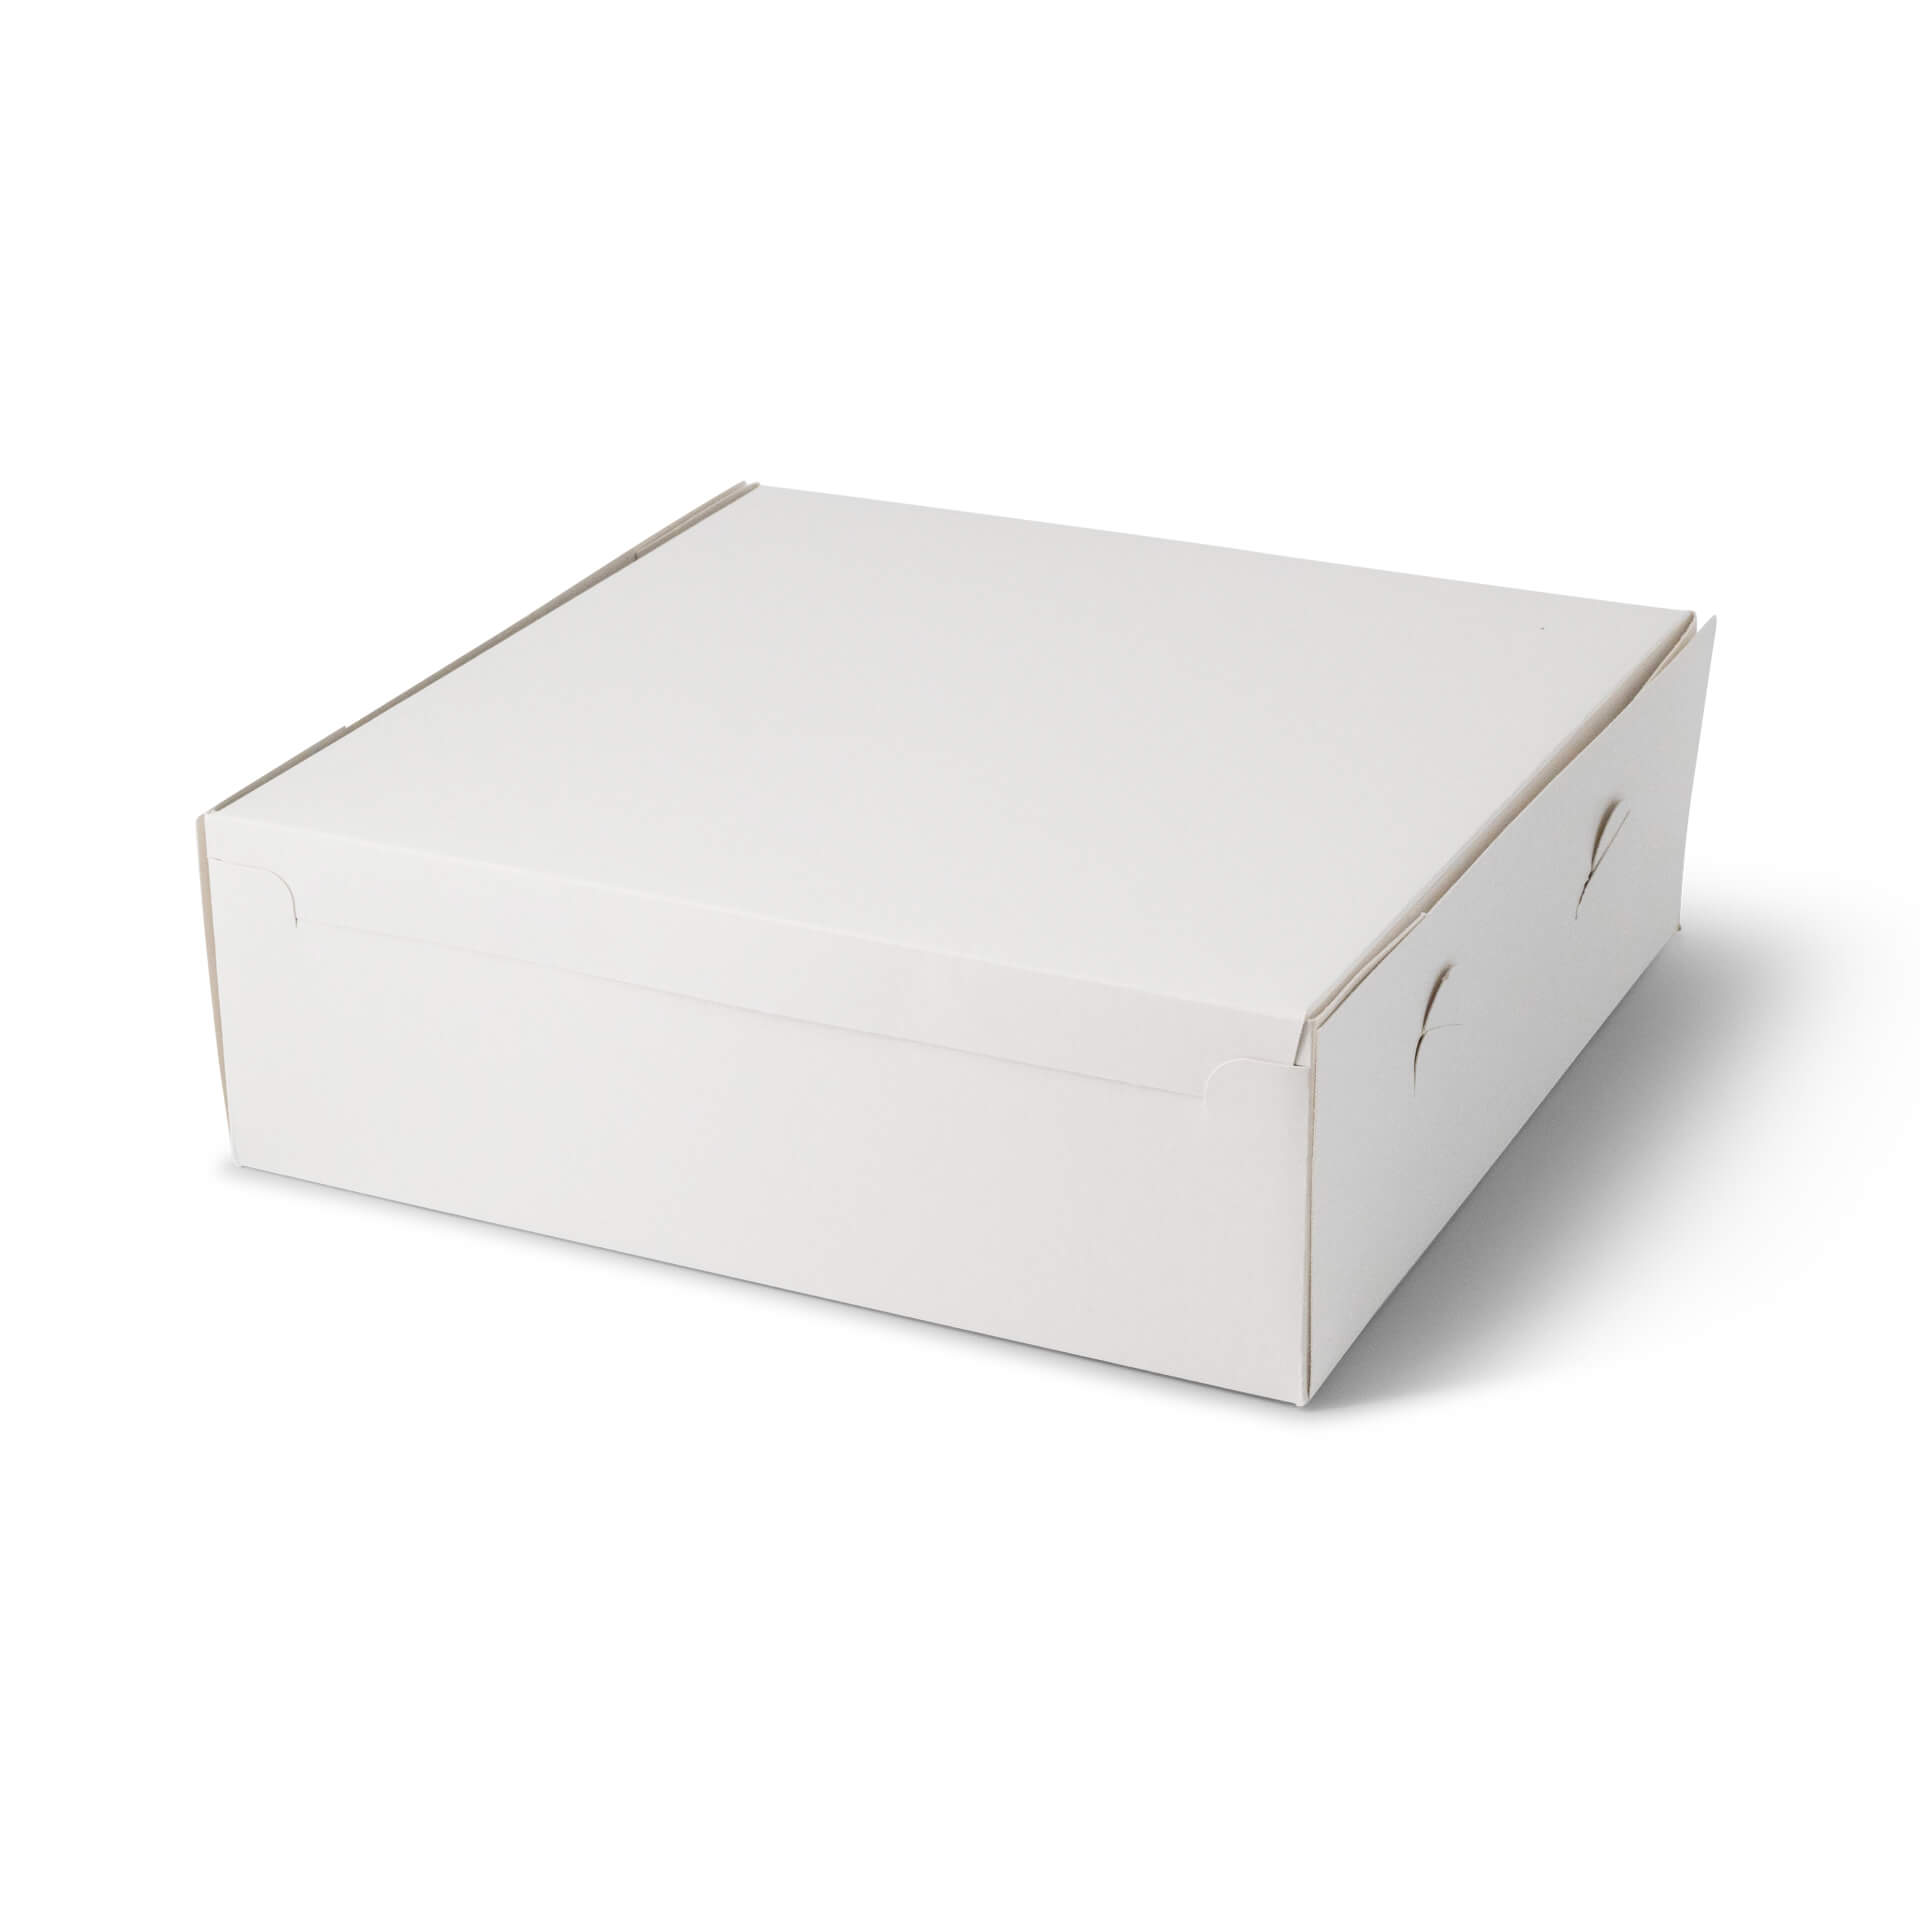 Torten-Kartons L, 30,5 x 30,5 x 10 cm, weiß